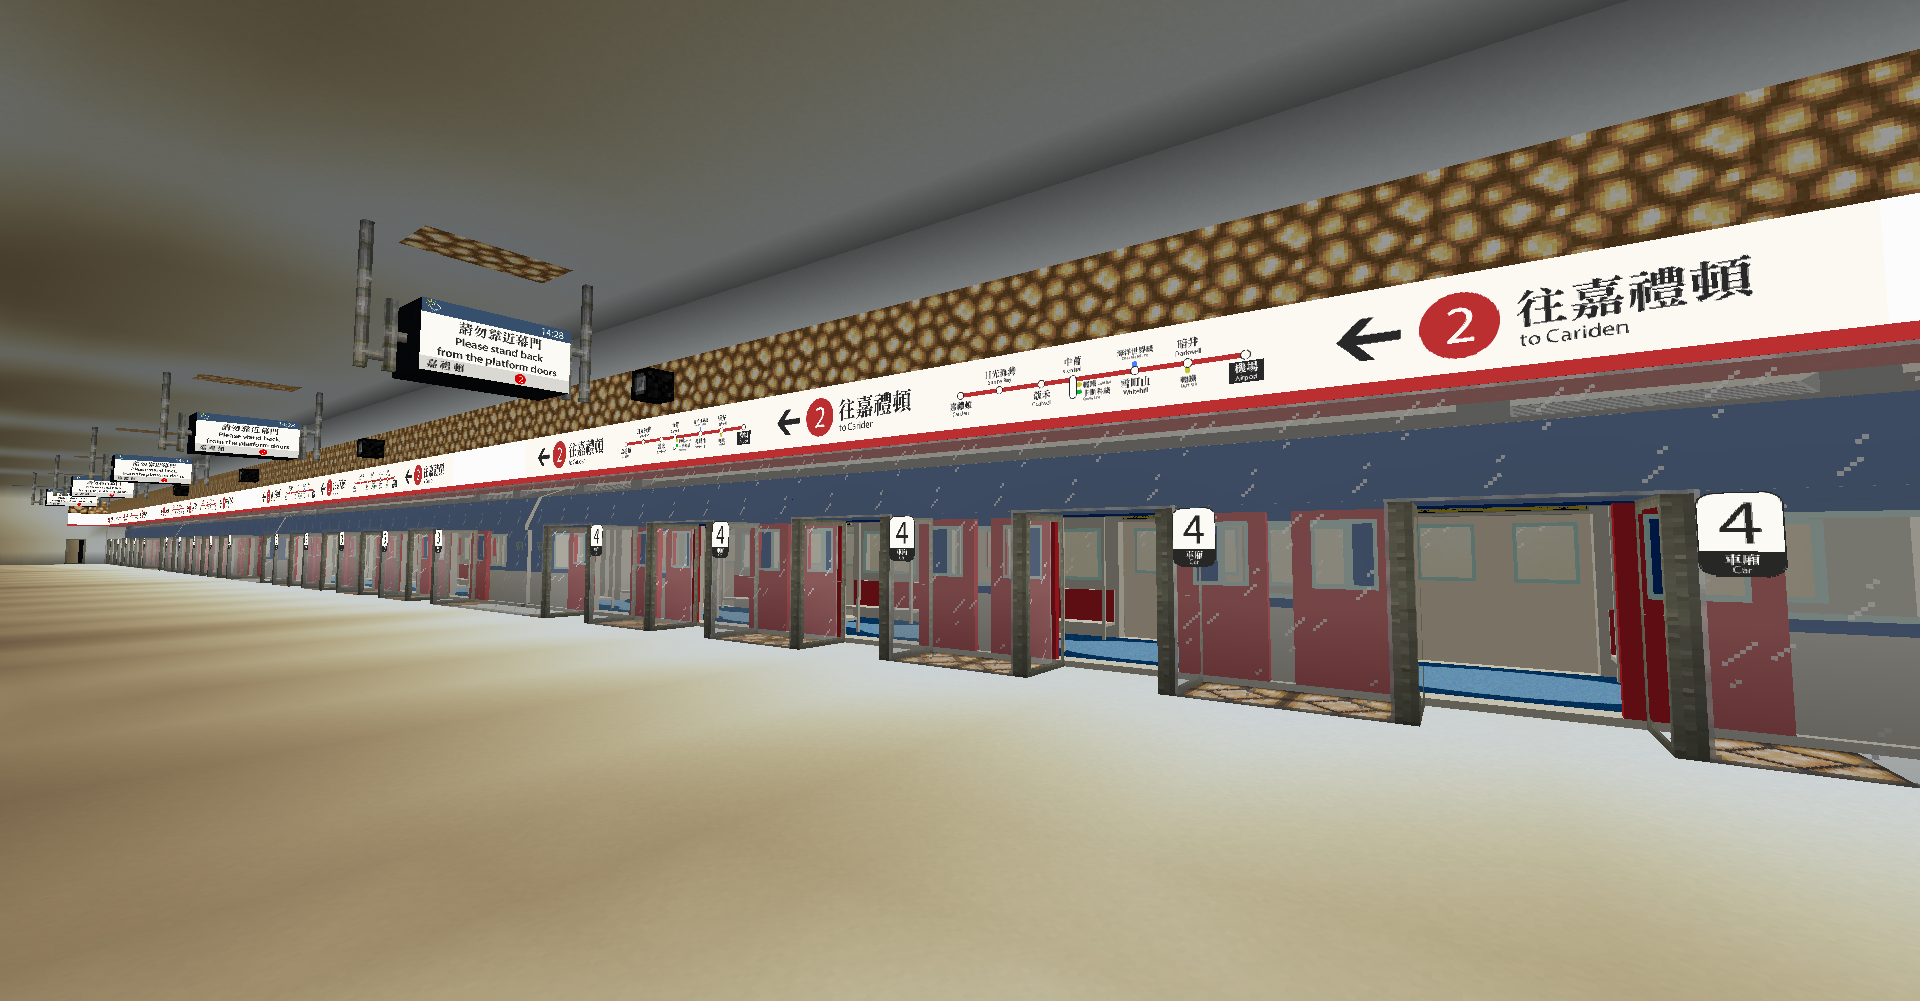 SCR Airport Station Platform 2